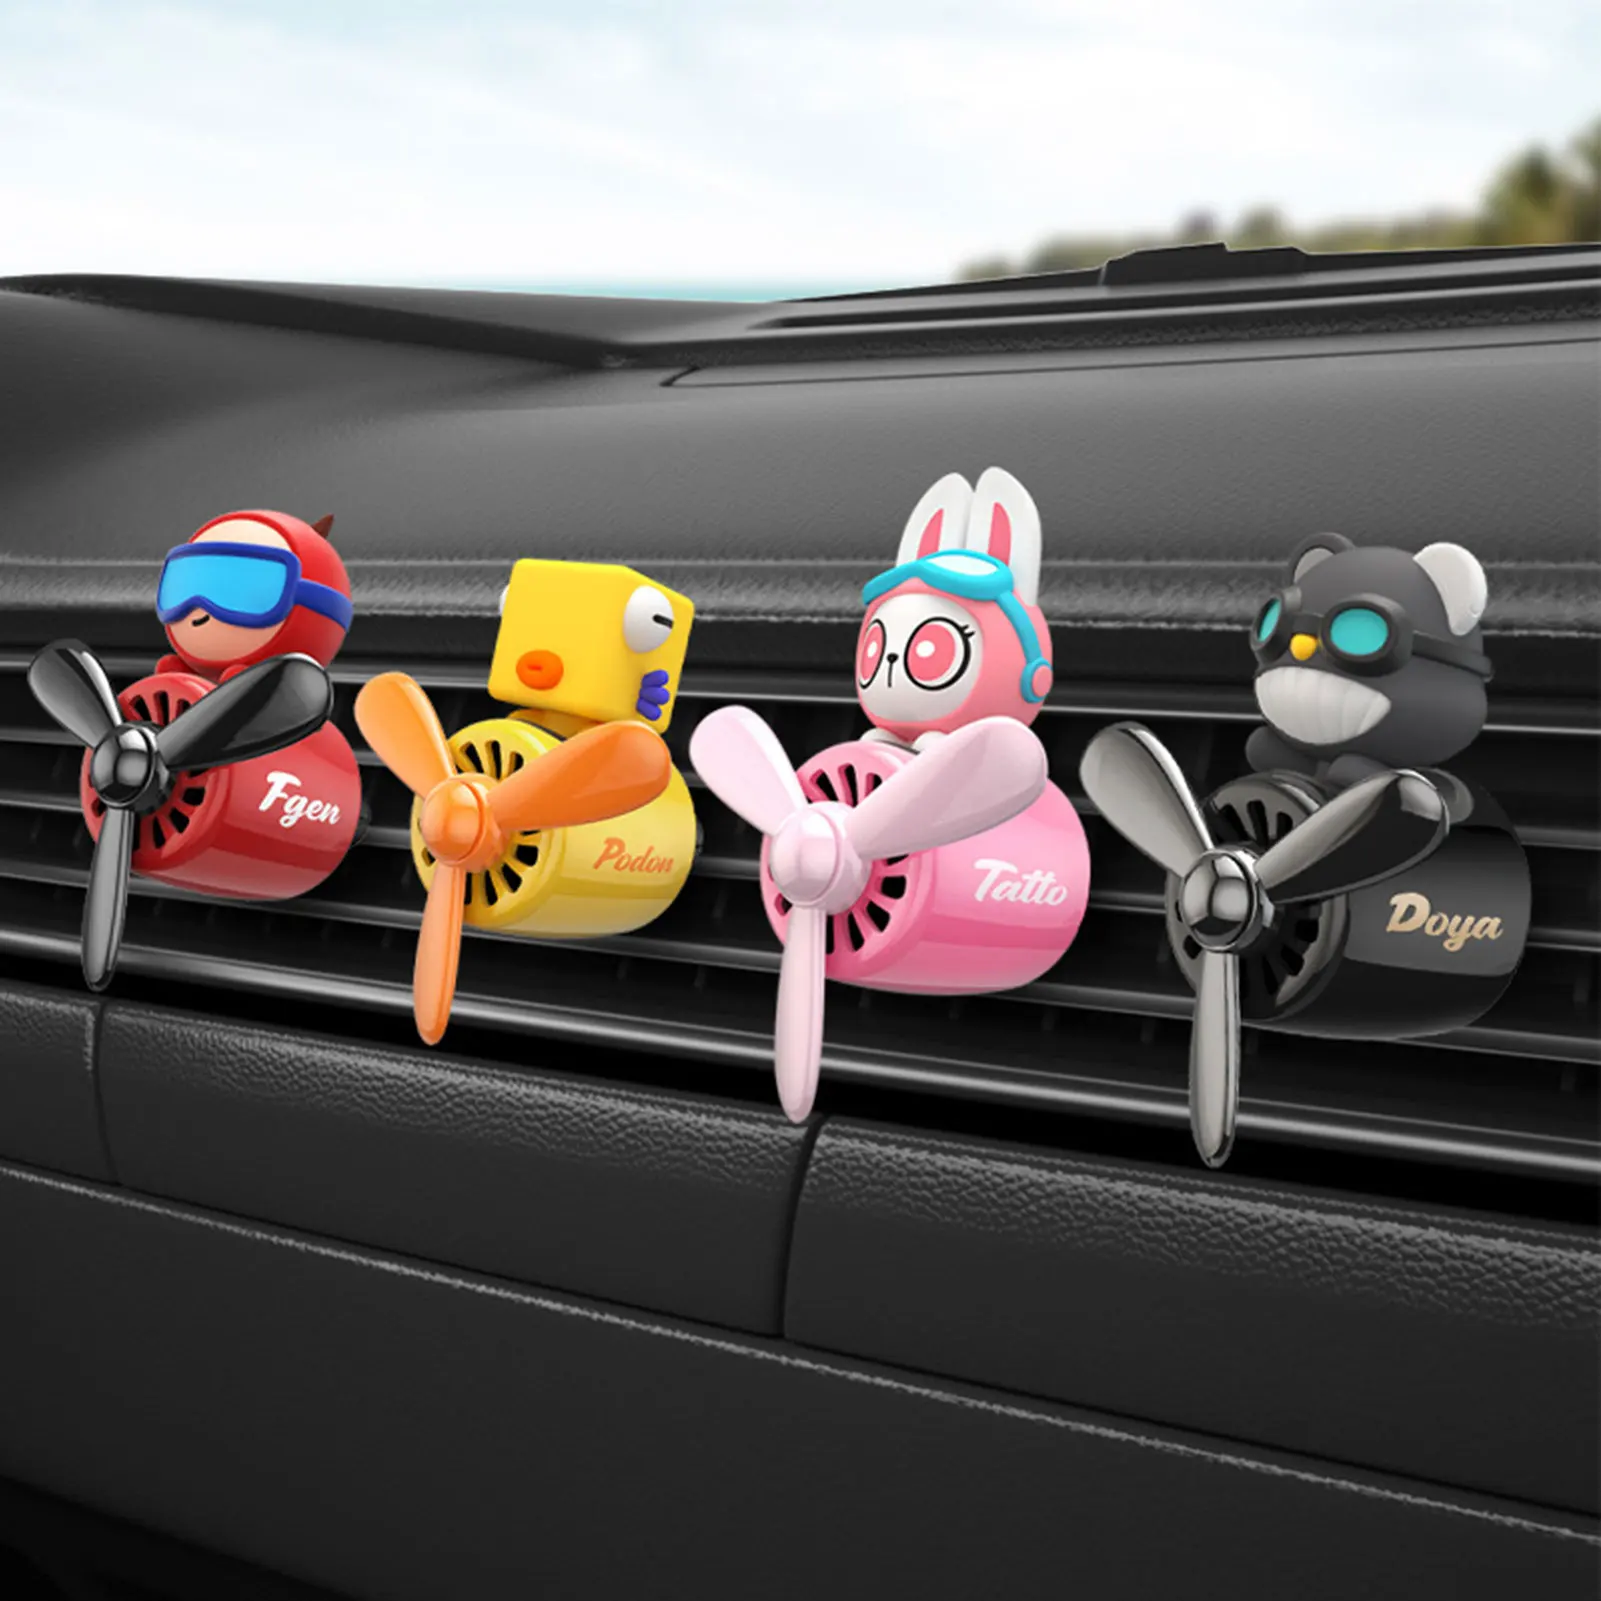 

Car Diffuser Odor Eliminator Car Air Freshener Cute Duck Bunny Bear Pilot Car Vent Clip Air Freshener for Interior Decorations